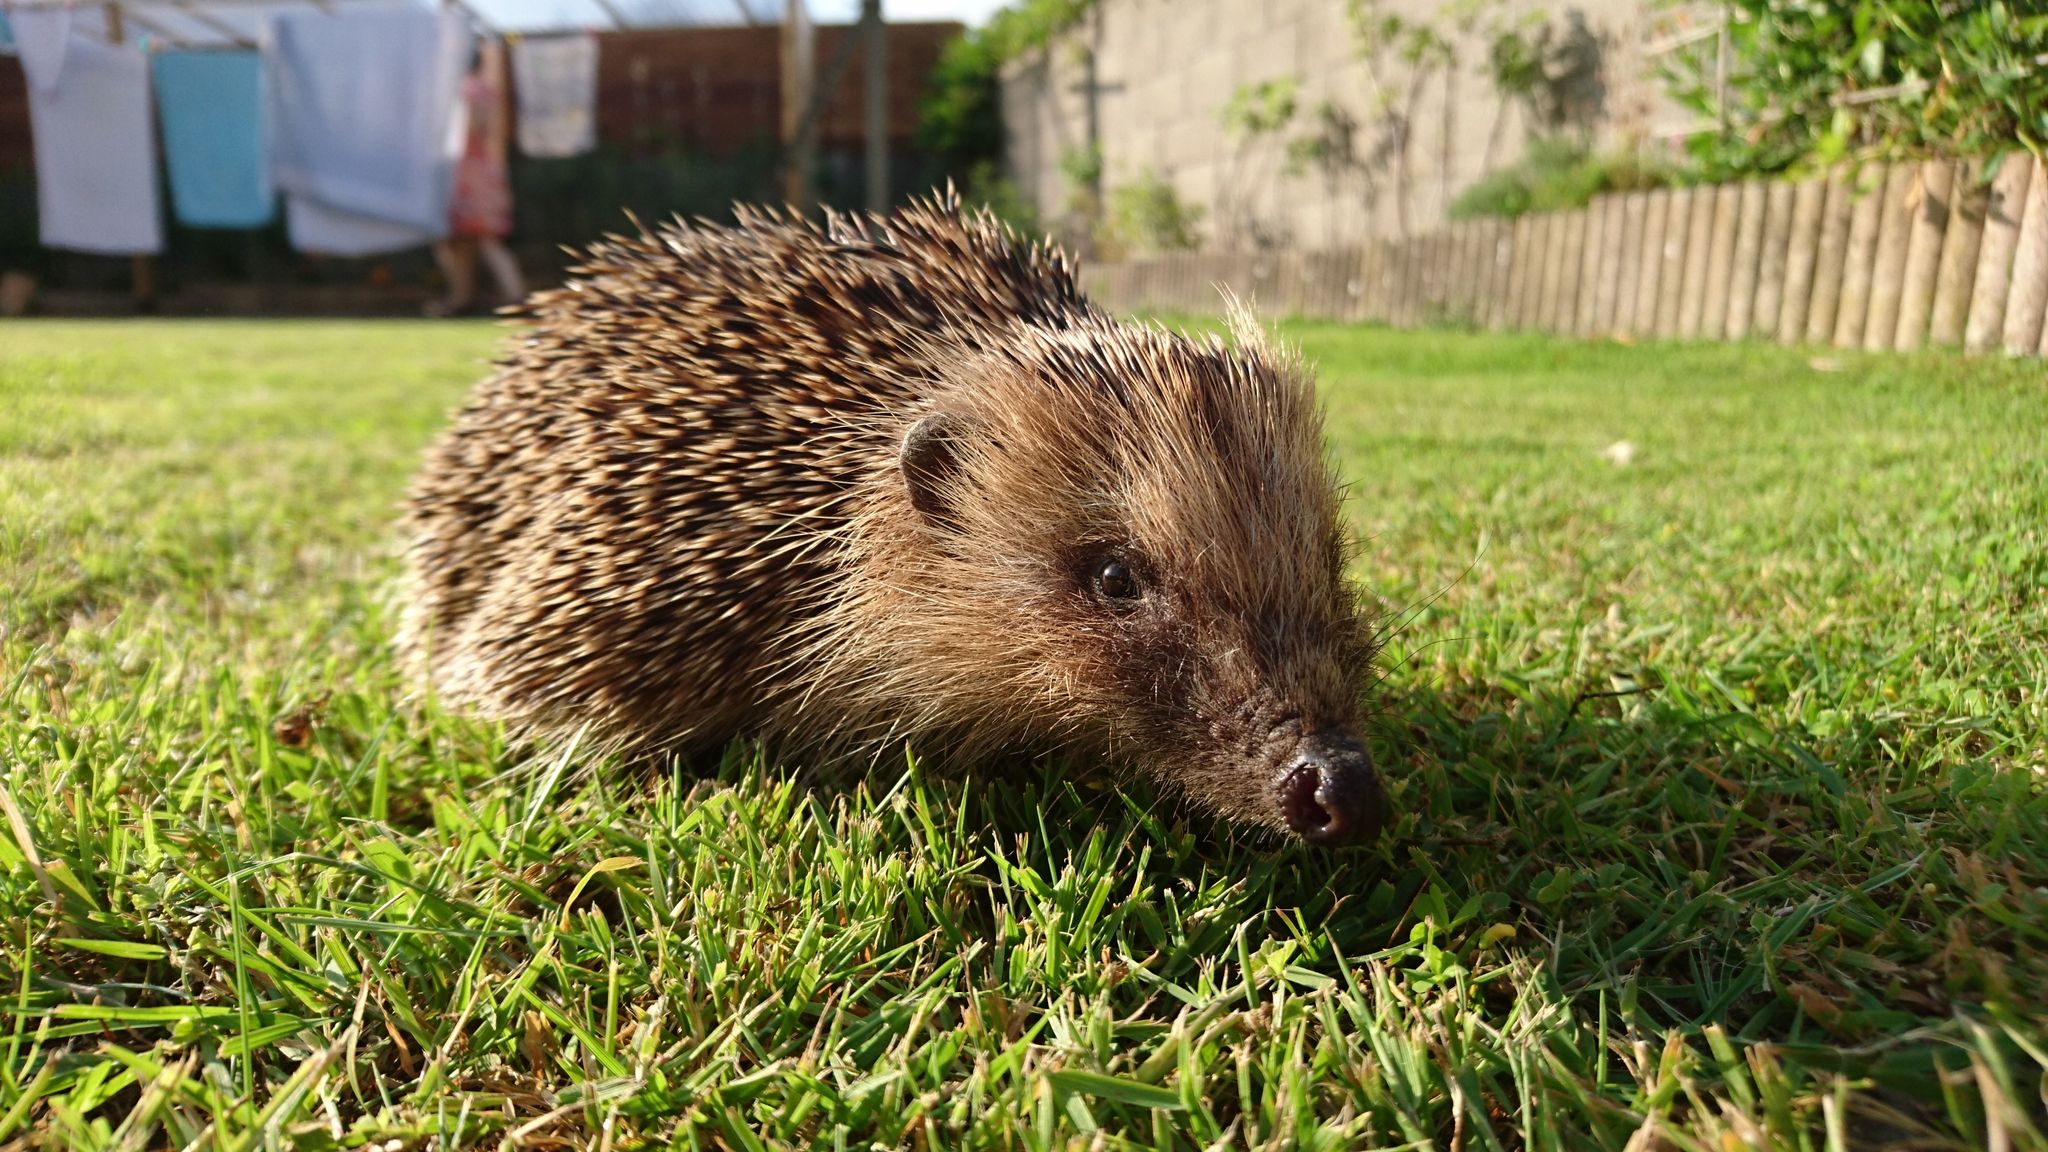 Hedgehog On Grass At Back Yard